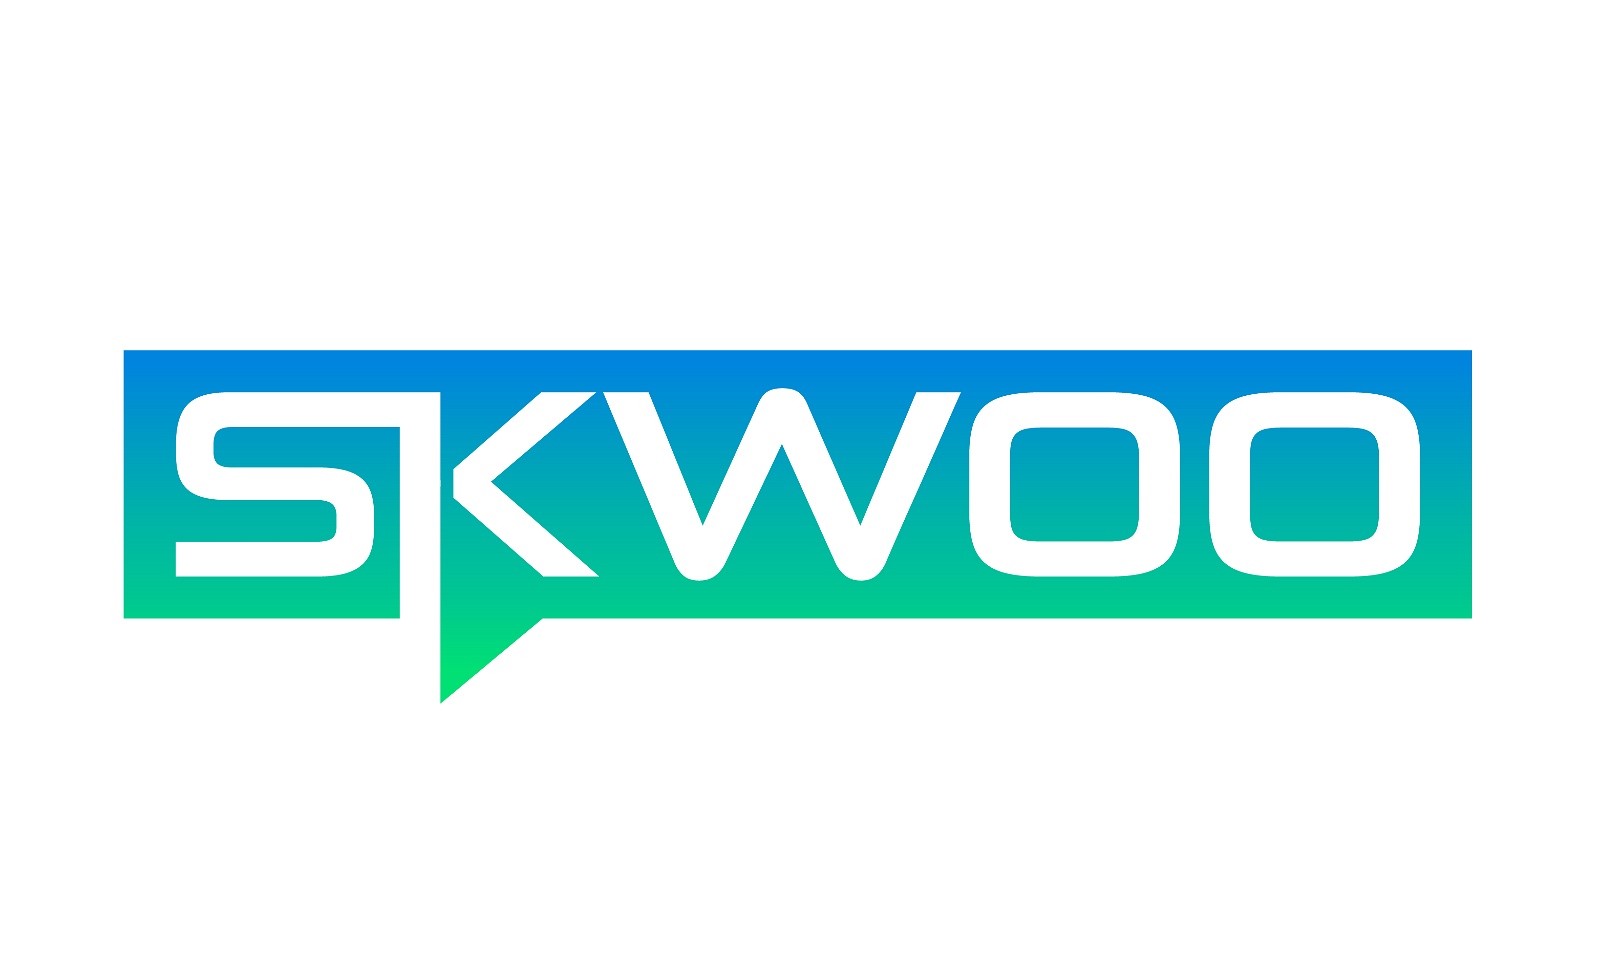 Skwoo.com - Creative brandable domain for sale